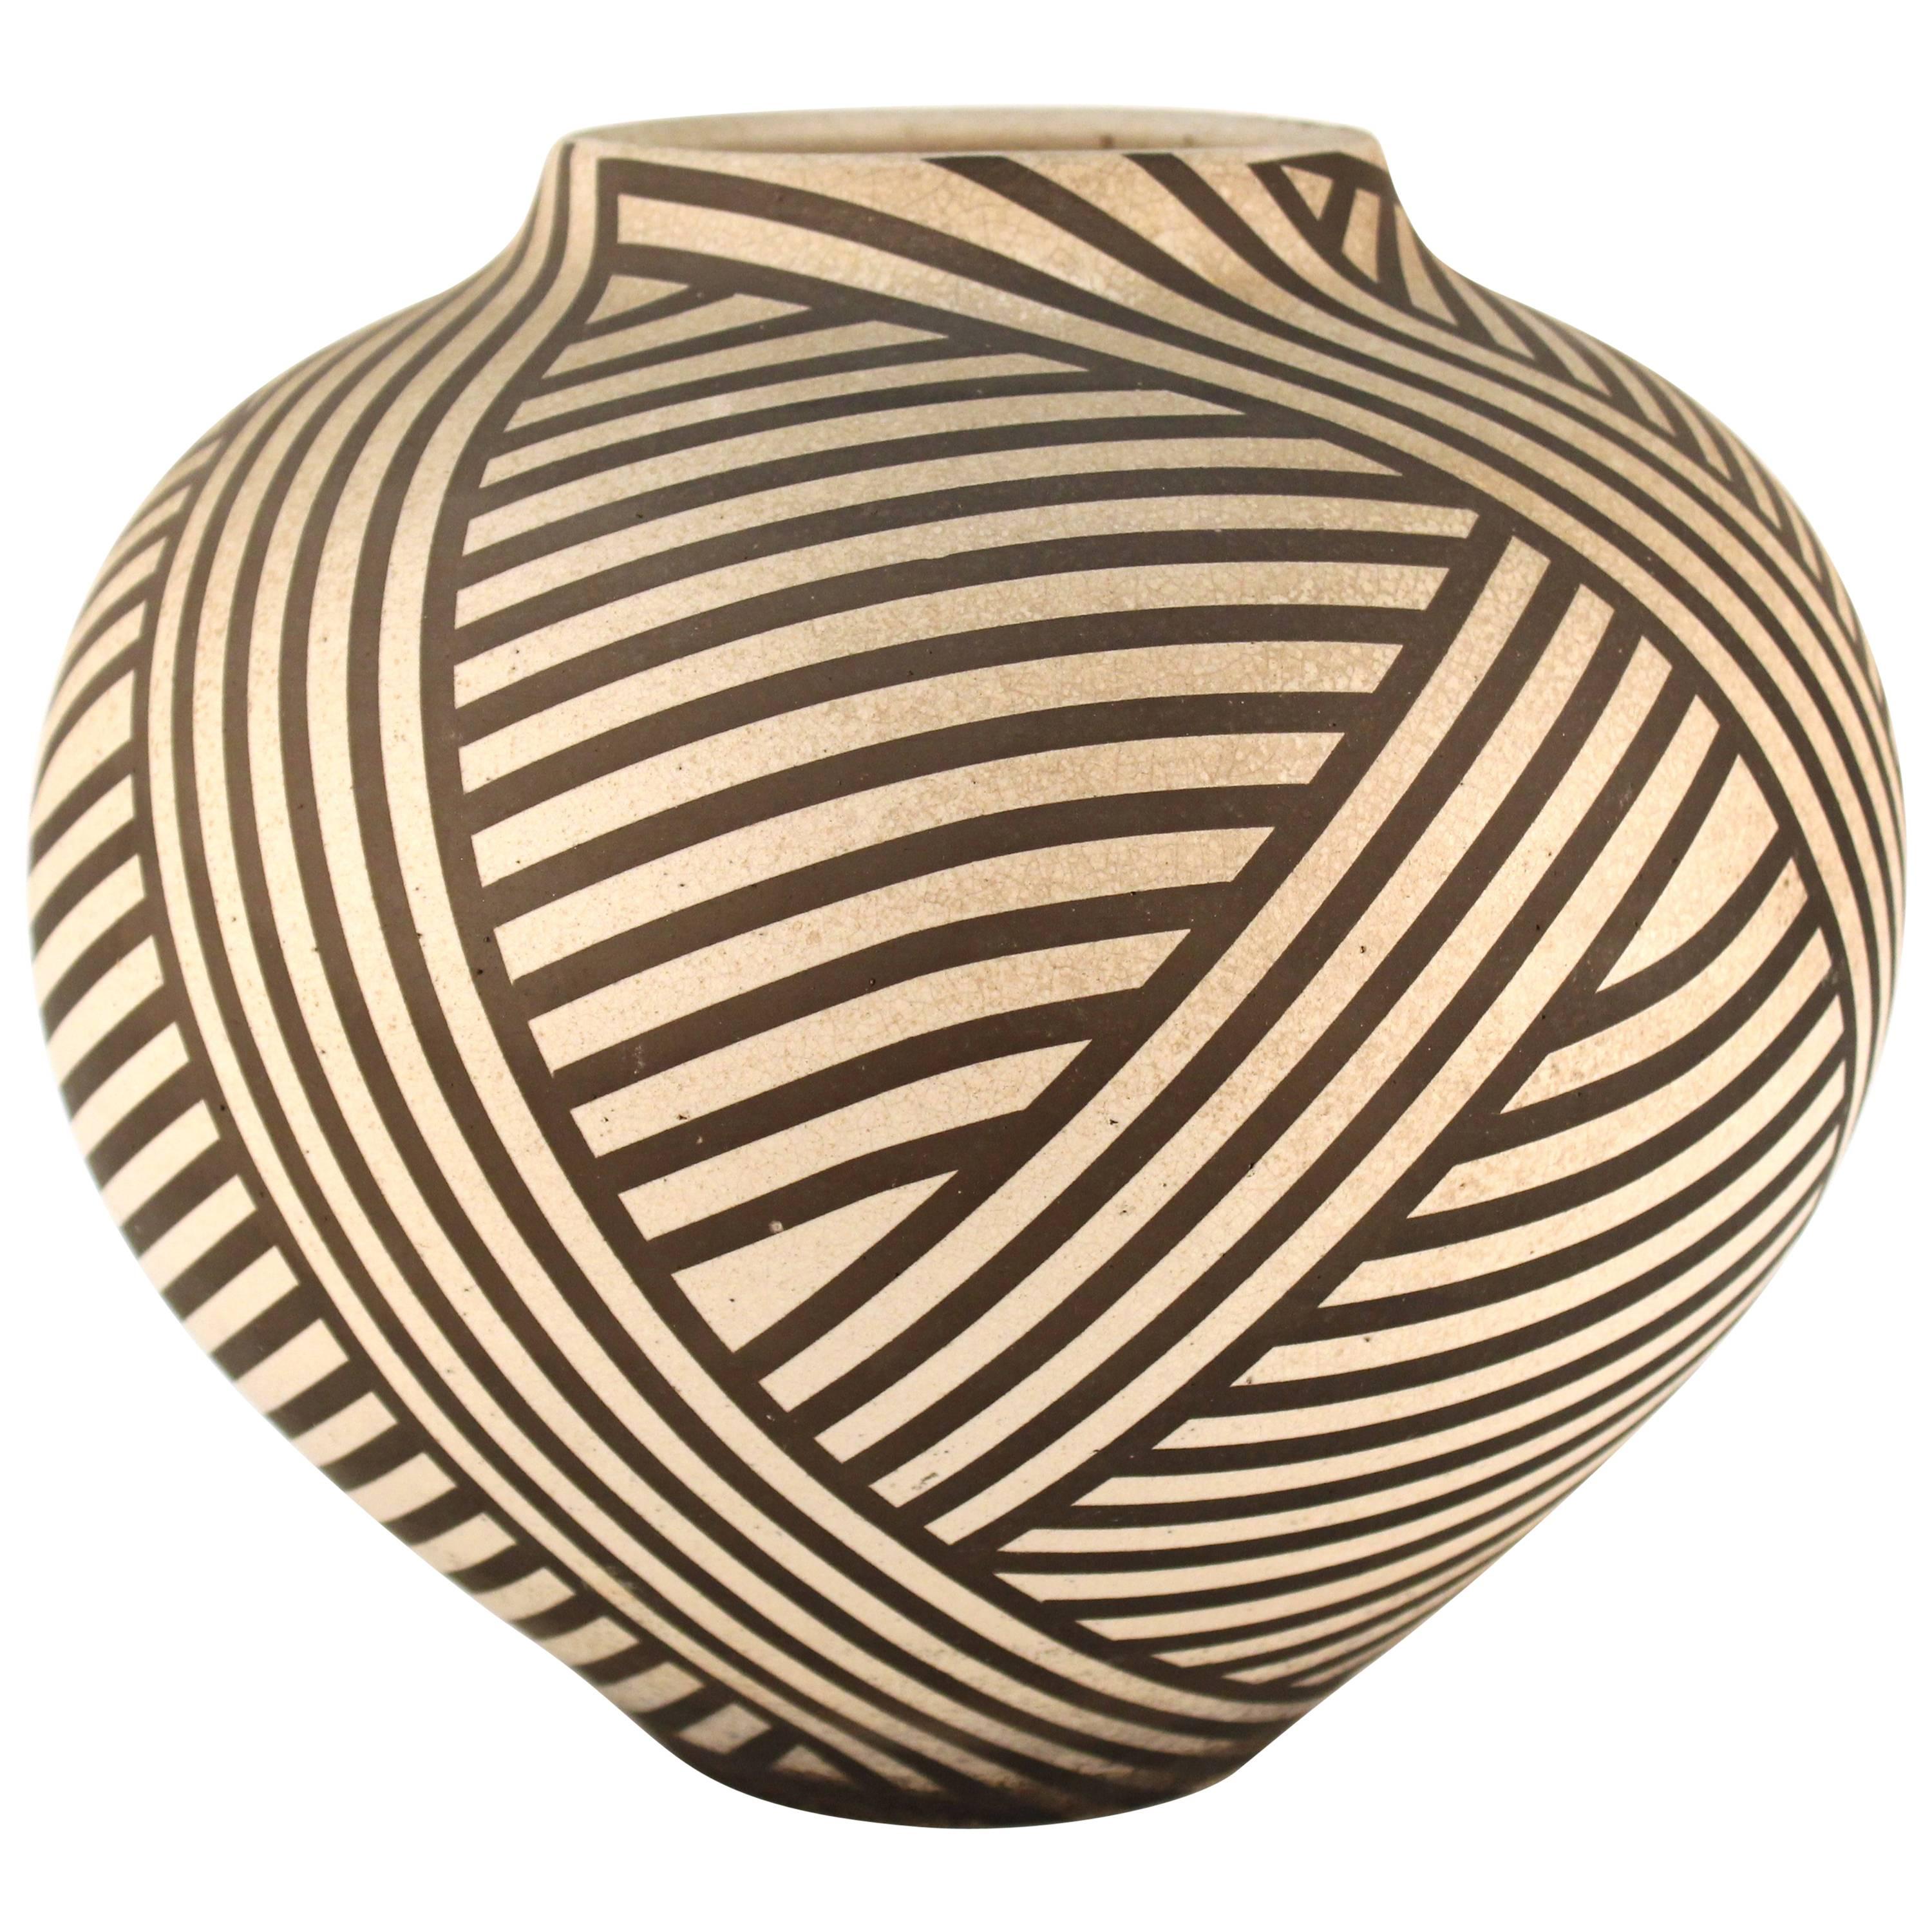 Nicholas Bernard Striped Ceramic Vessel